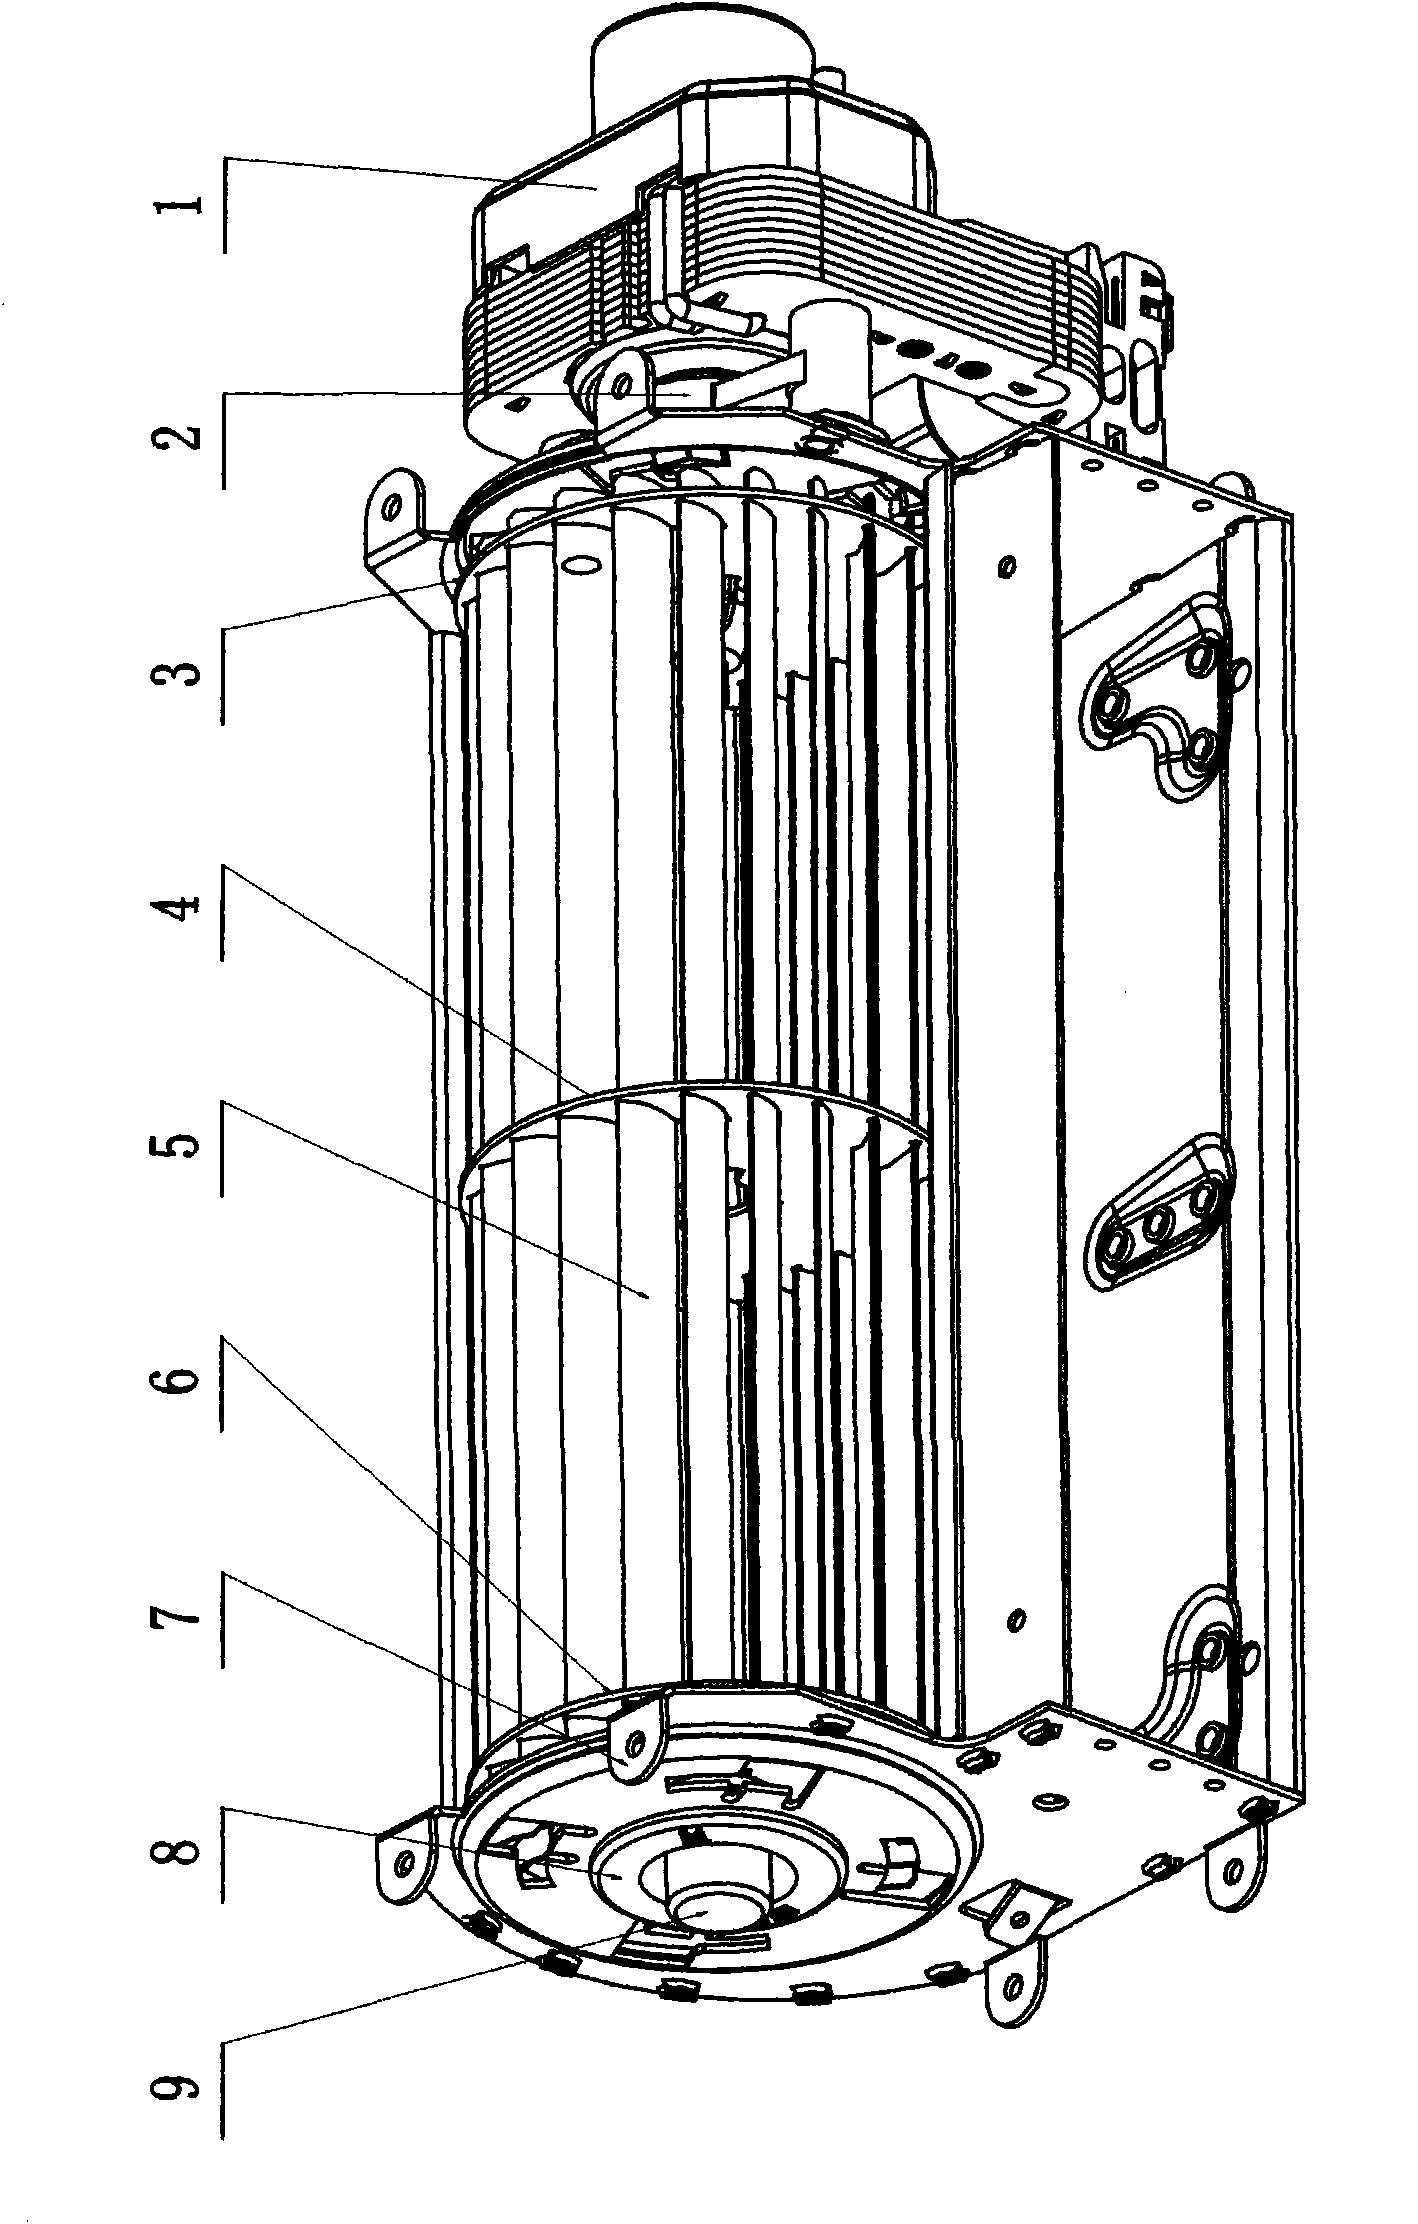 Cross-flow fan of composite wire blade impeller